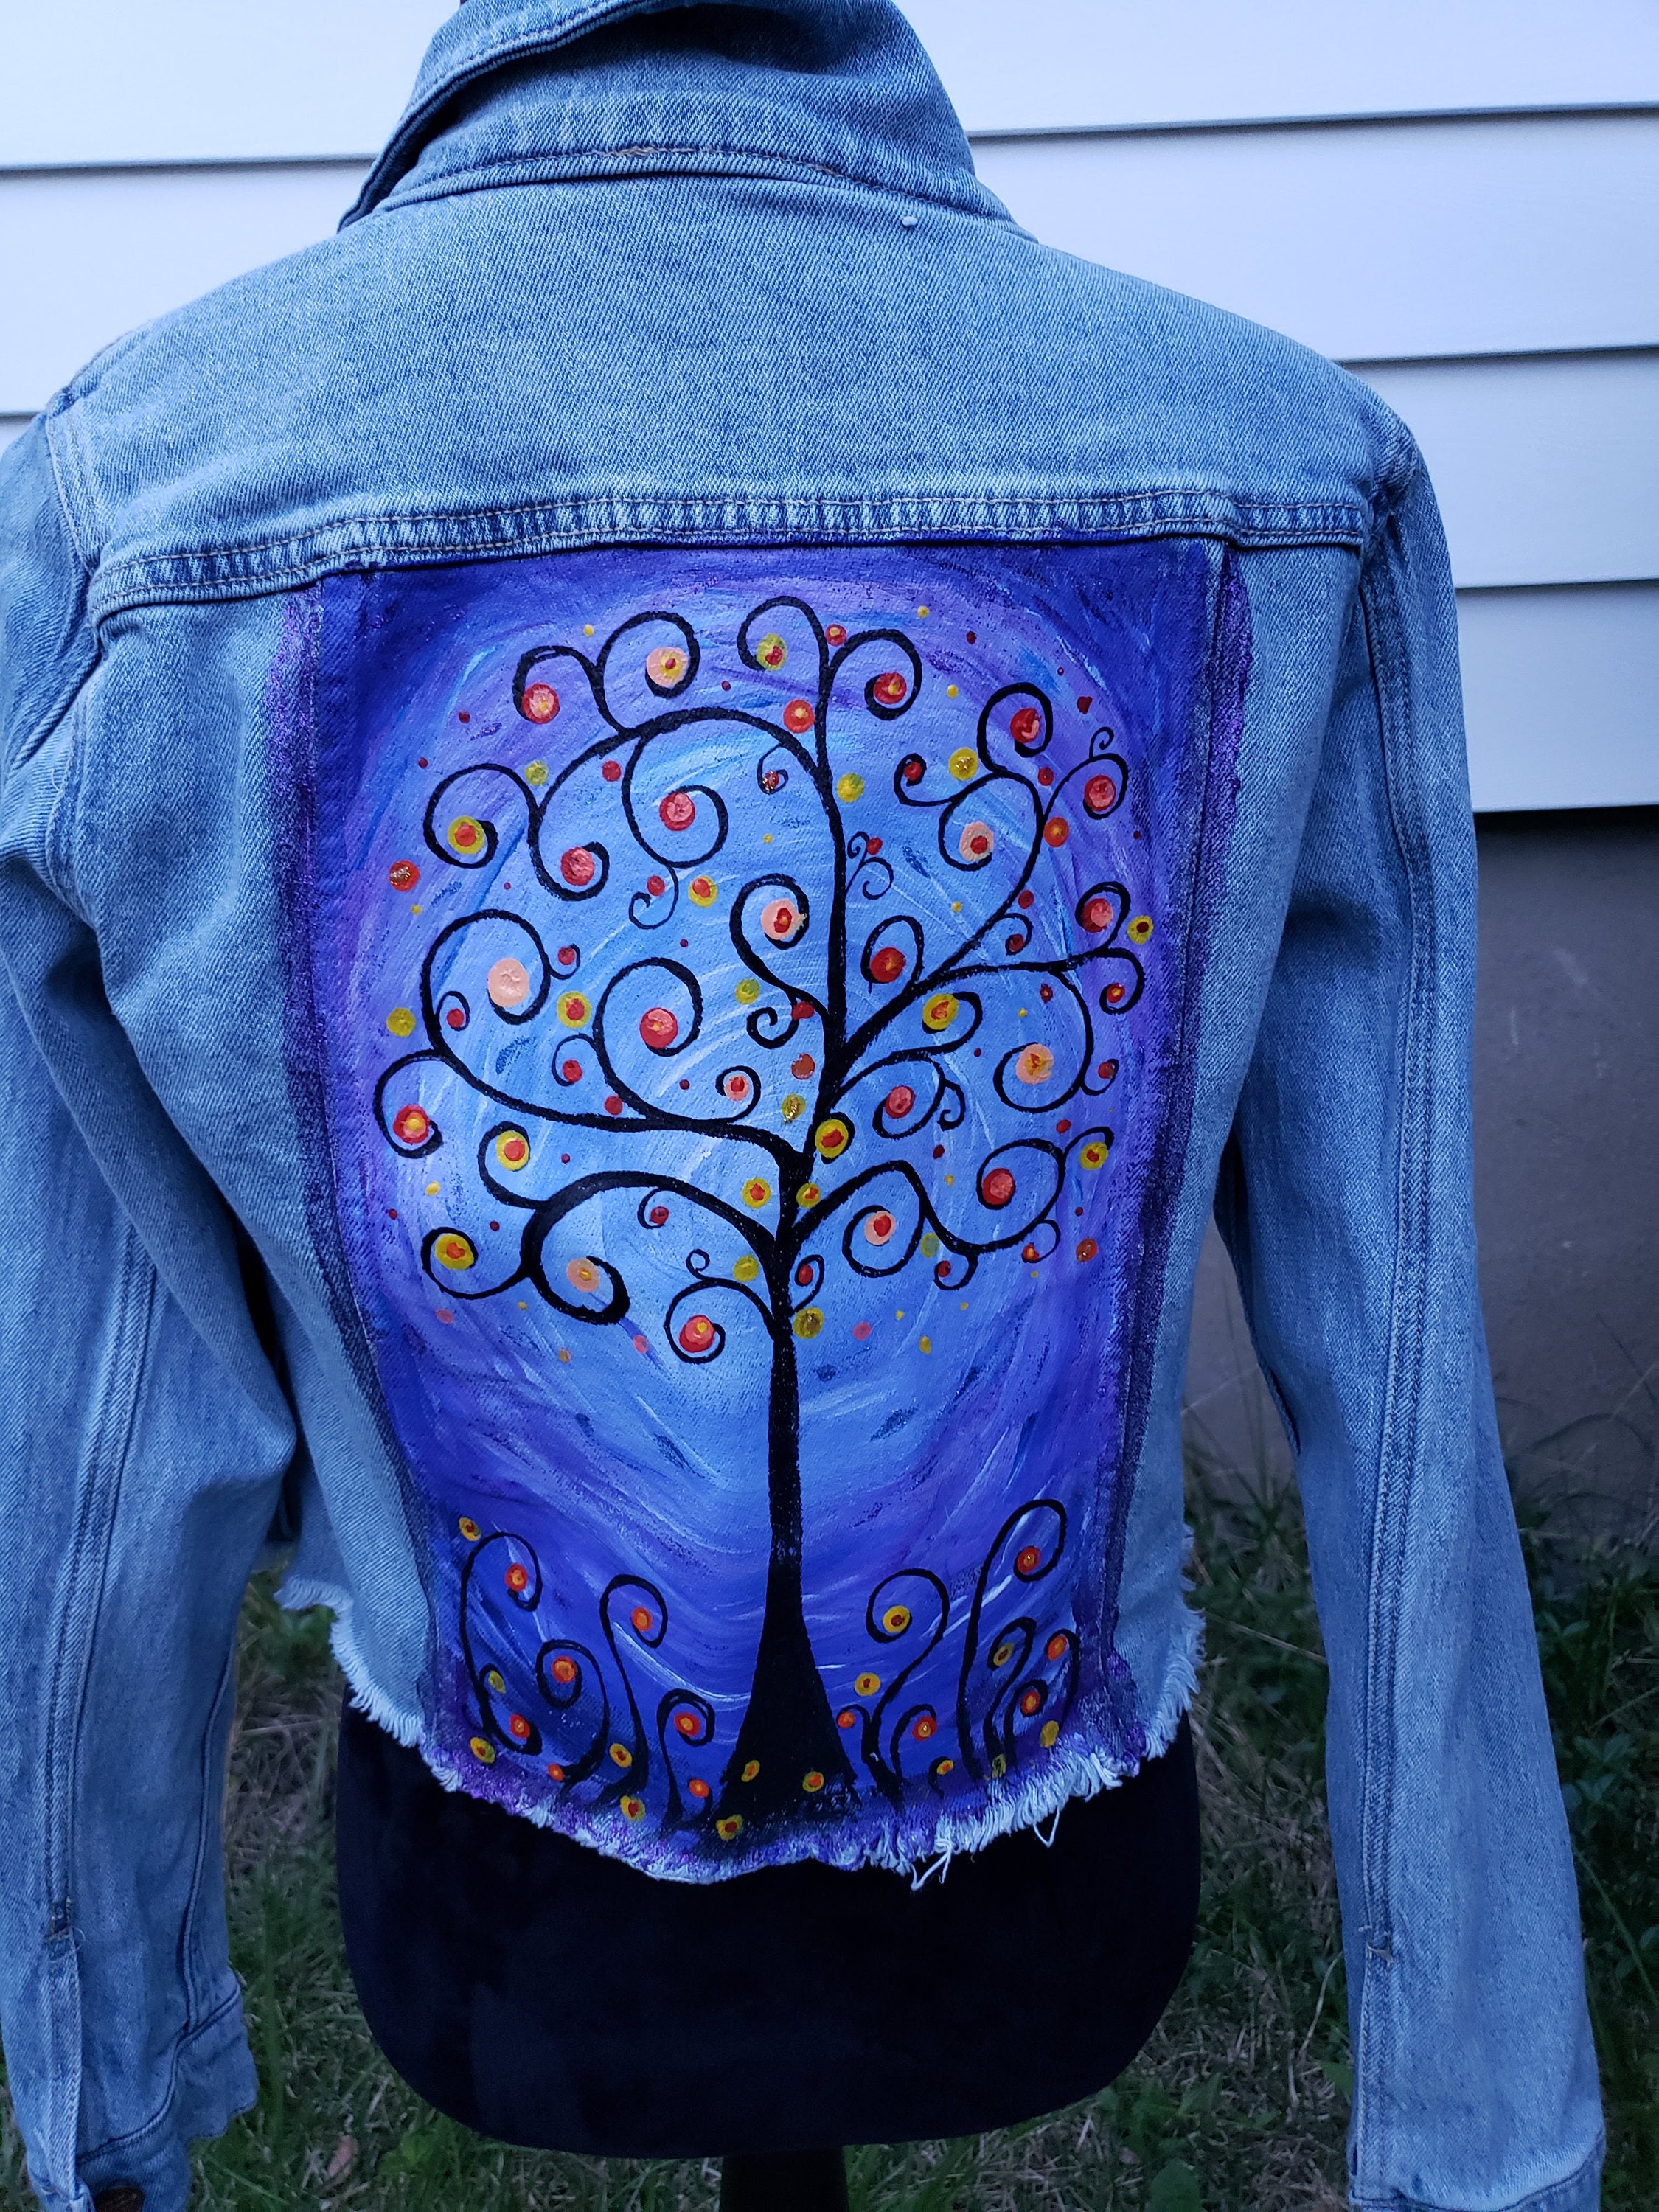 Virgencita Hand Painted Denim Jacket — Agave Girl Boutique